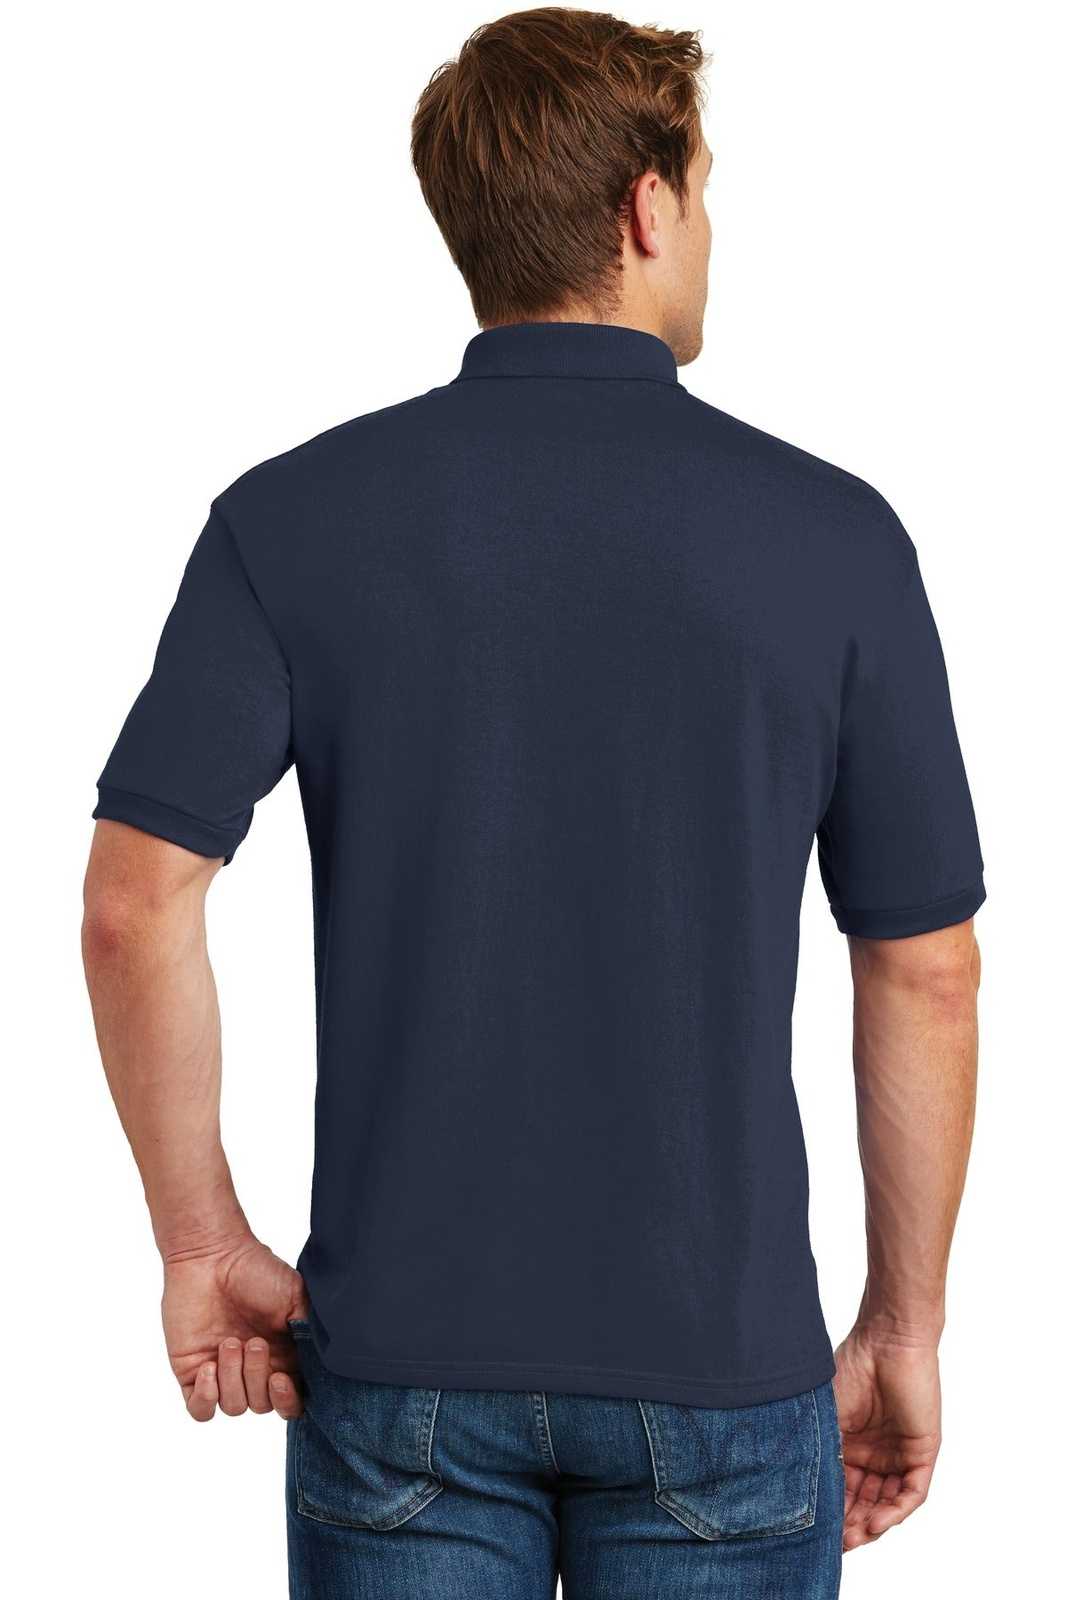 Hanes 054X Ecosmart 5.2-Ounce Jersey Knit Sport Shirt - Navy - HIT a Double